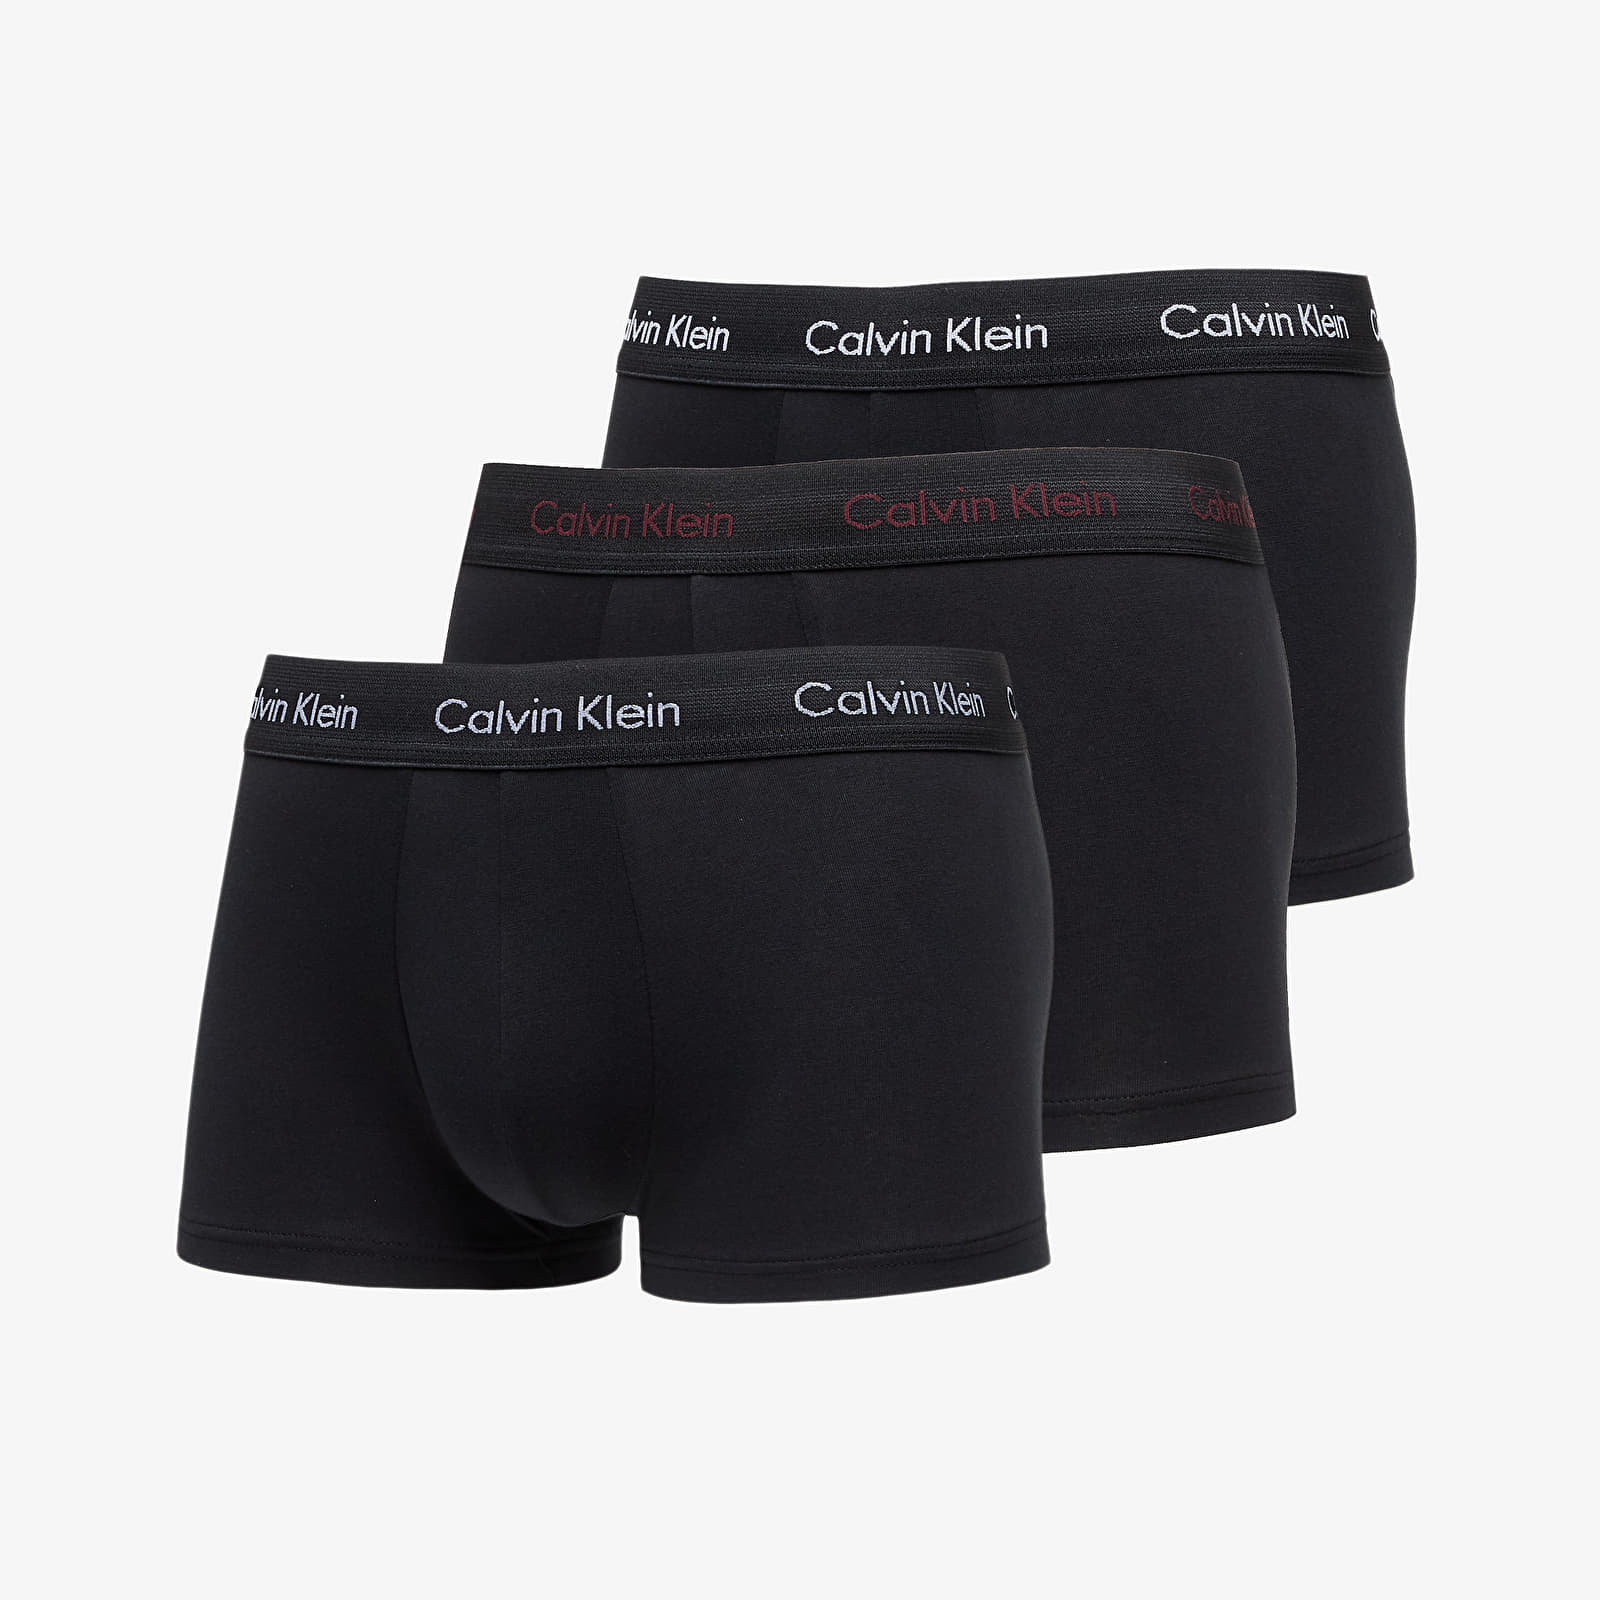 Boxershorts Calvin Klein Cotton Stretch Low Rise Trunk 3-Pack Black